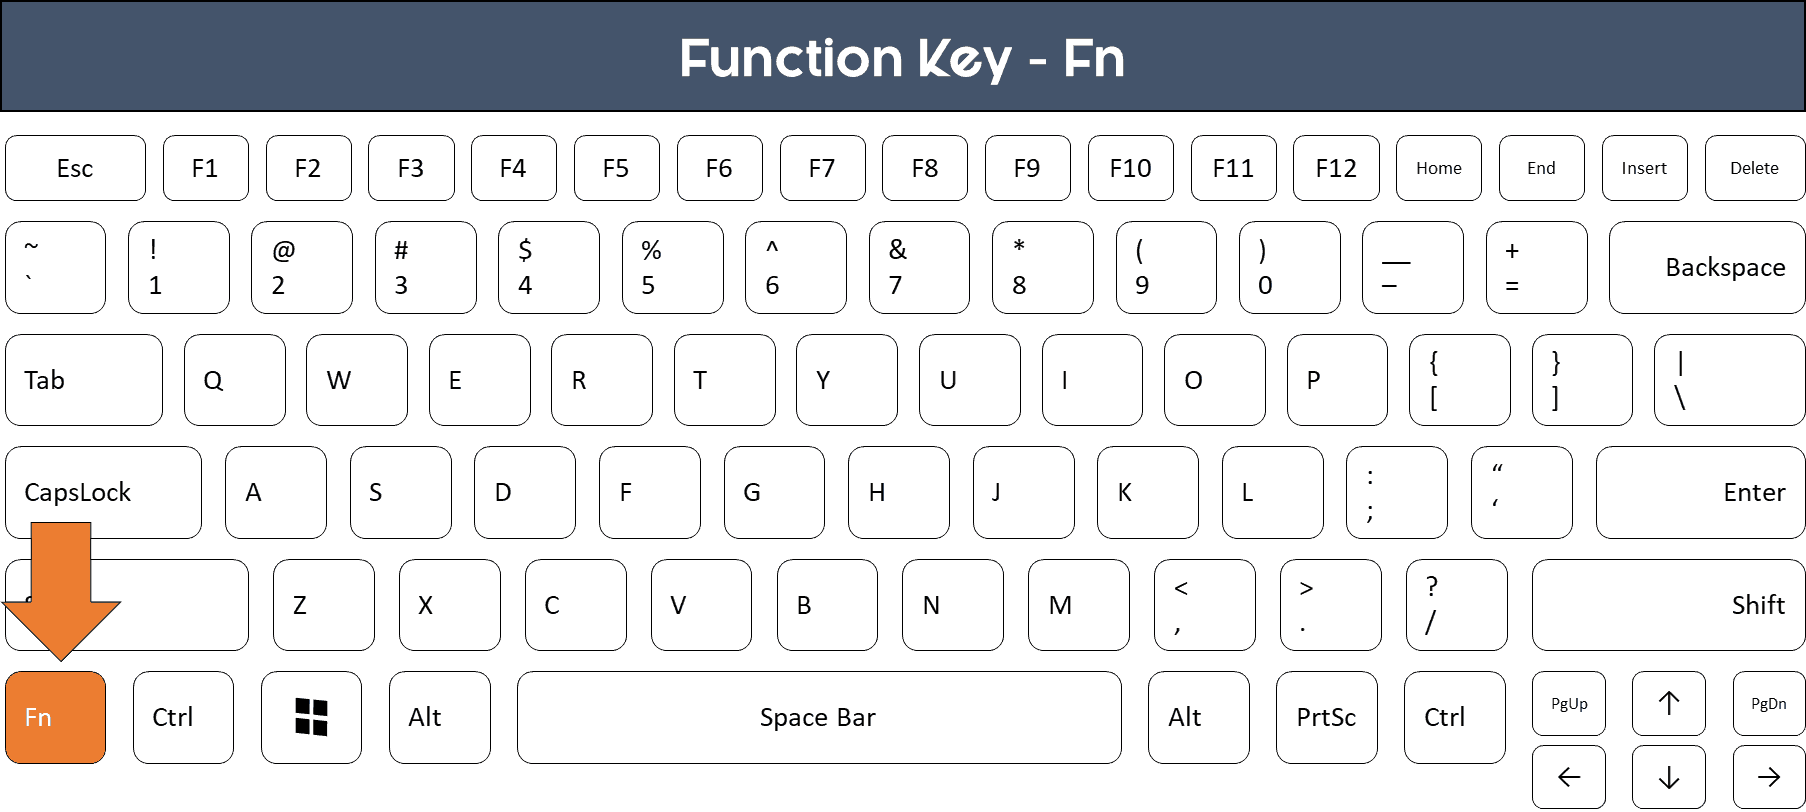 mep keyboard for emacs on mac os x